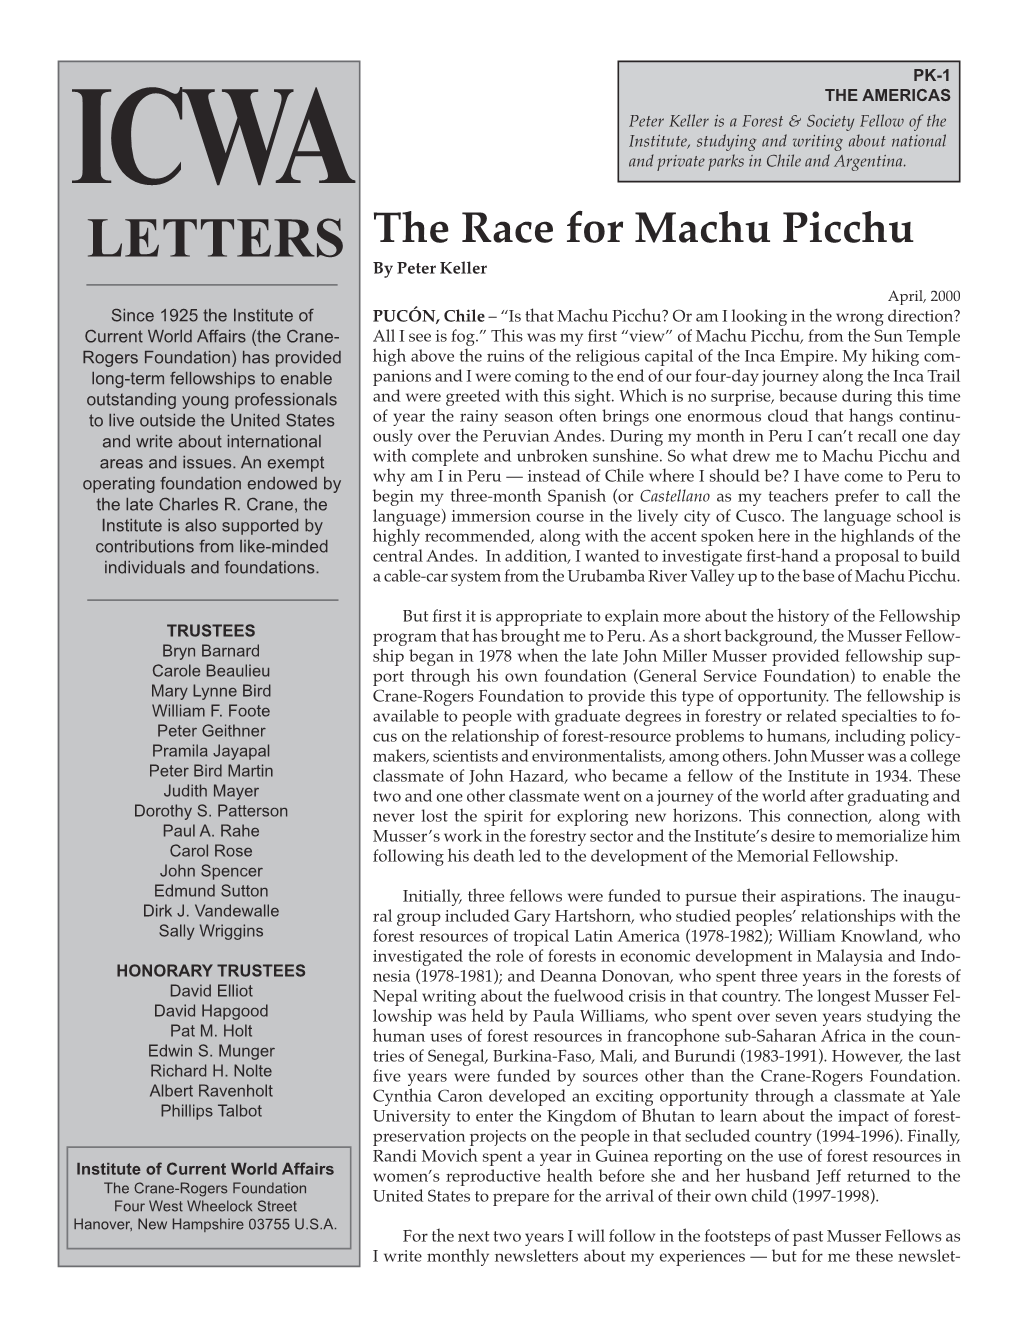 The Race for Machu Picchu